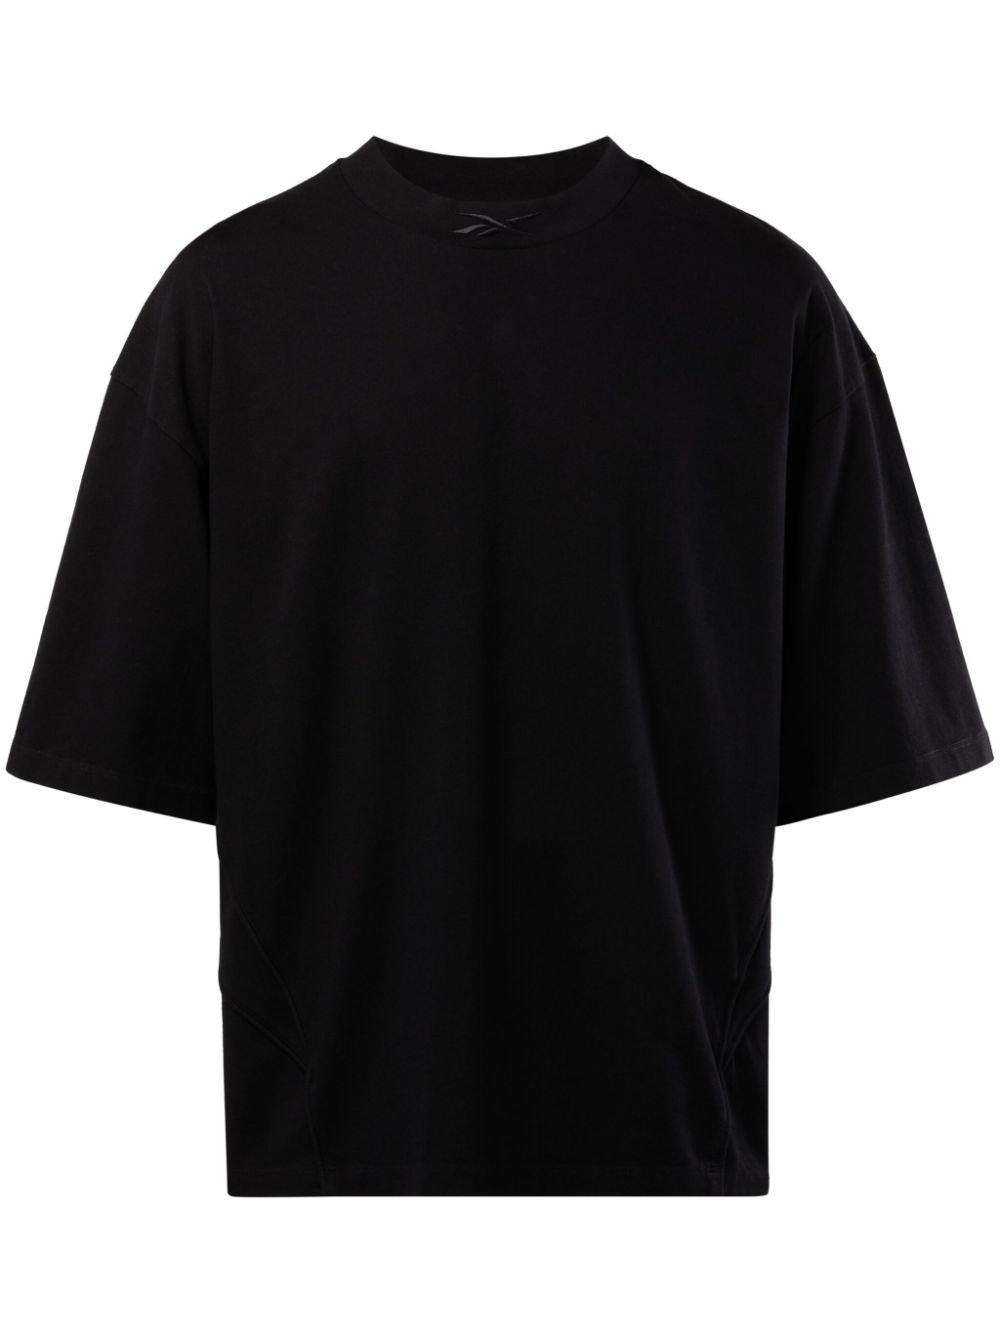 Image 1 of Reebok LTD piped-trim cotton T-shirt